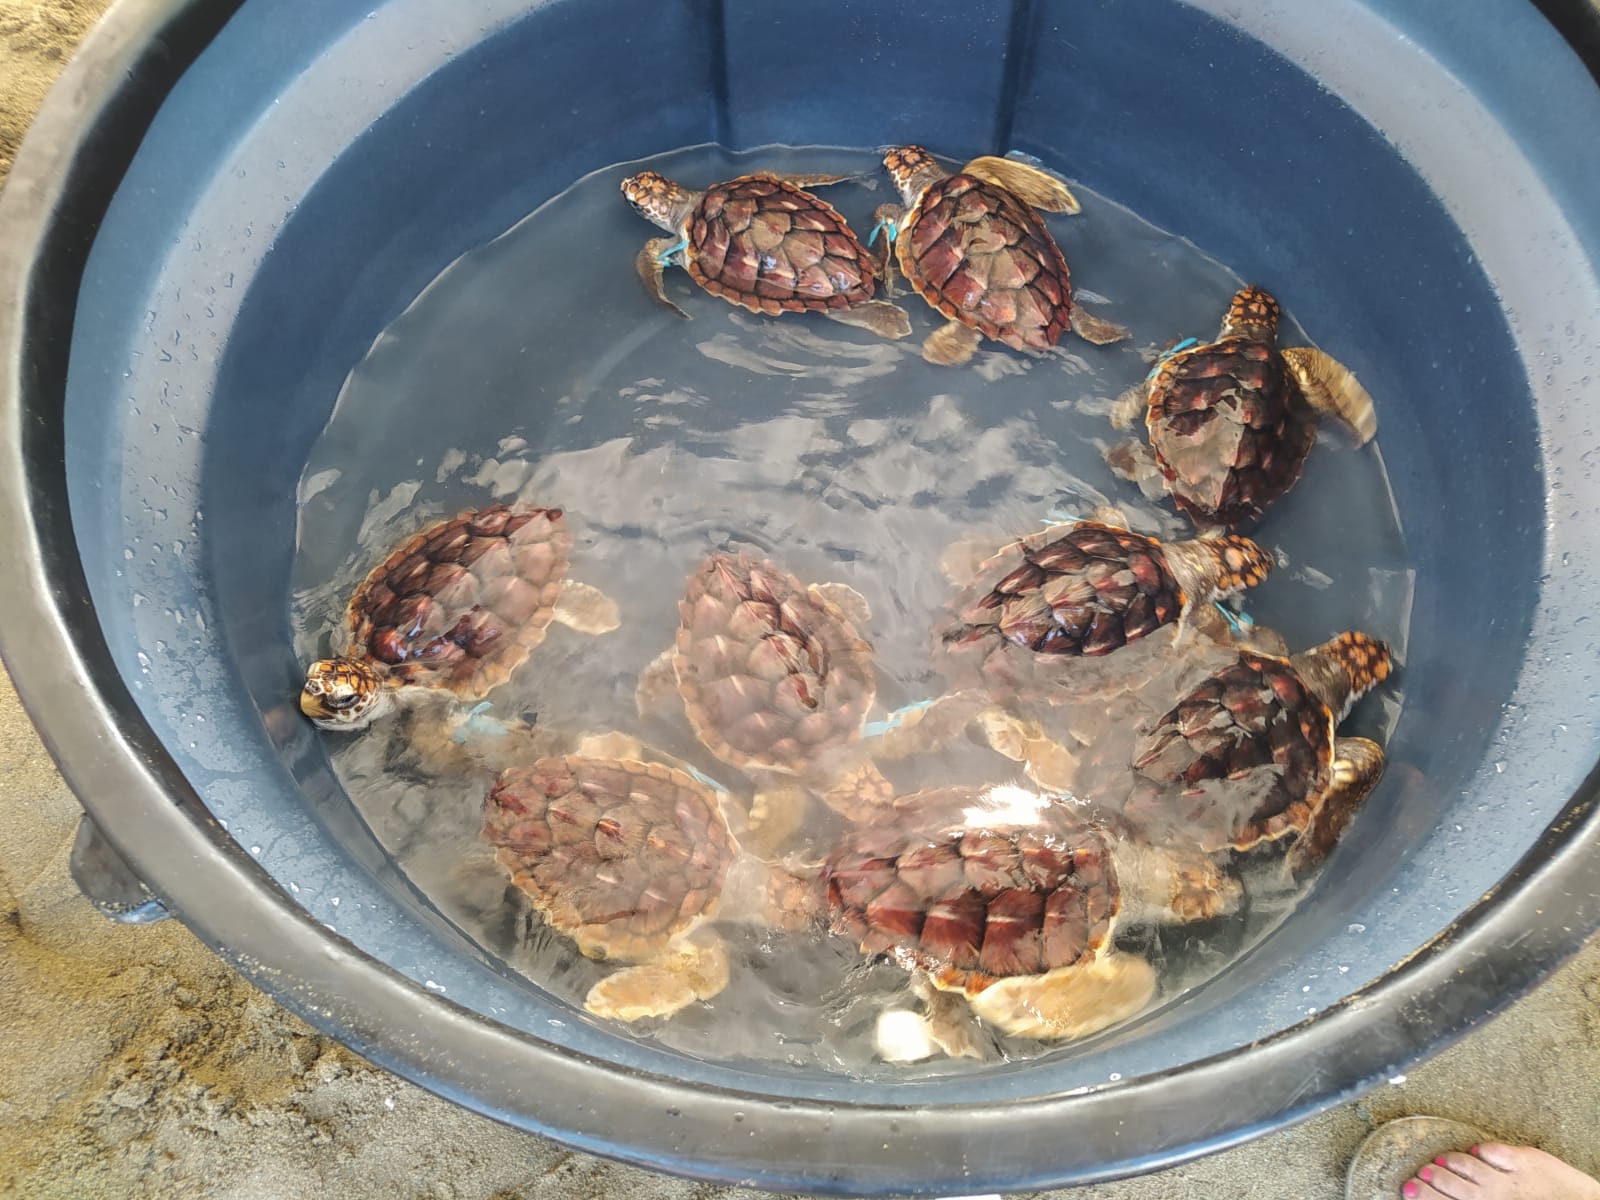 Algunas de las tortugas liberadas.